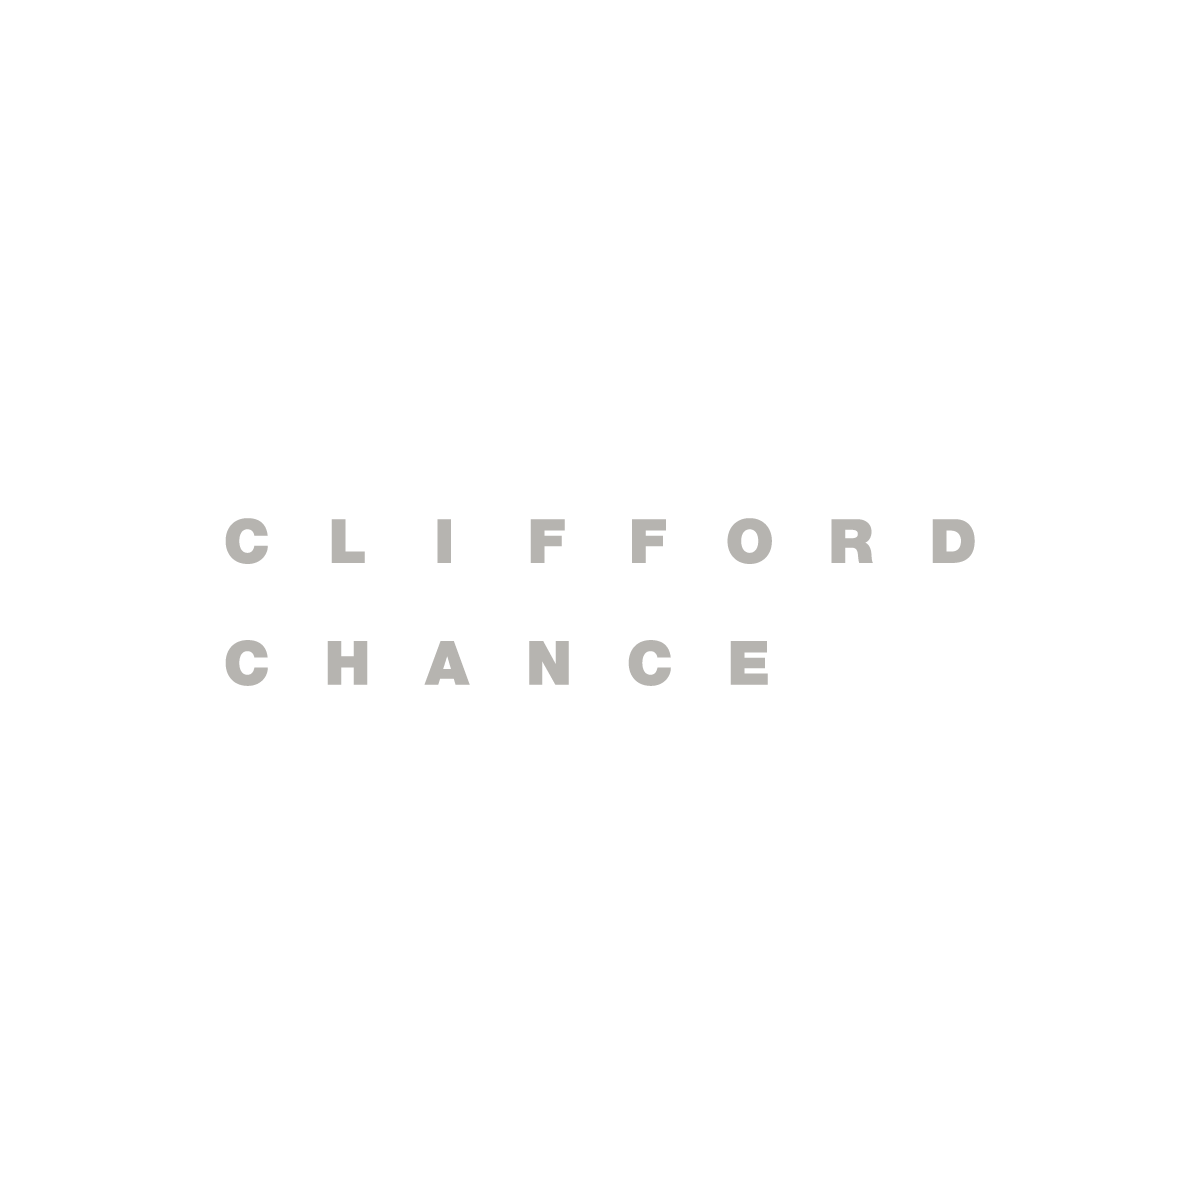 Clifford Chance